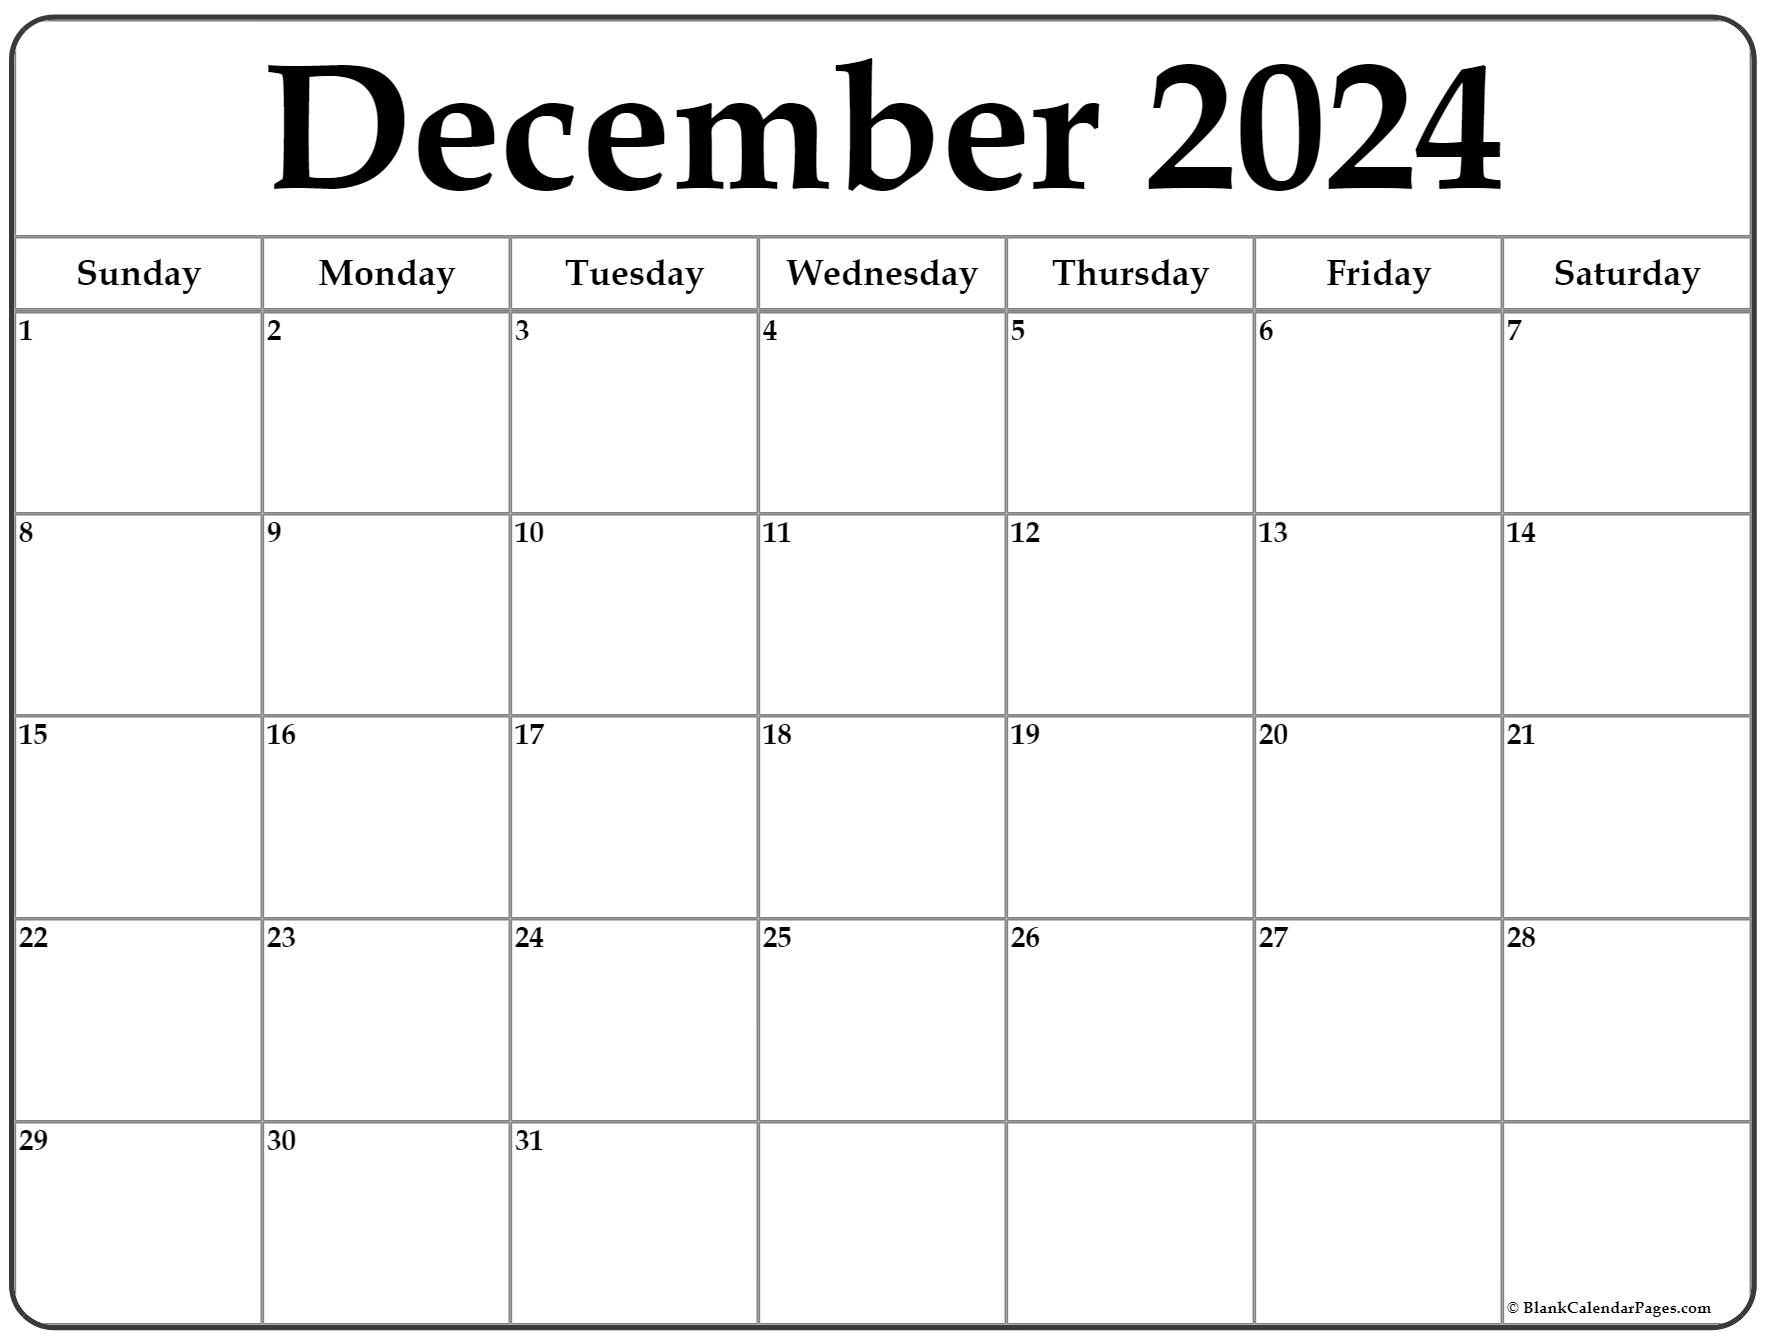 December 2024 Calendar | Free Printable Calendar | Free Printable Calendar December 2024